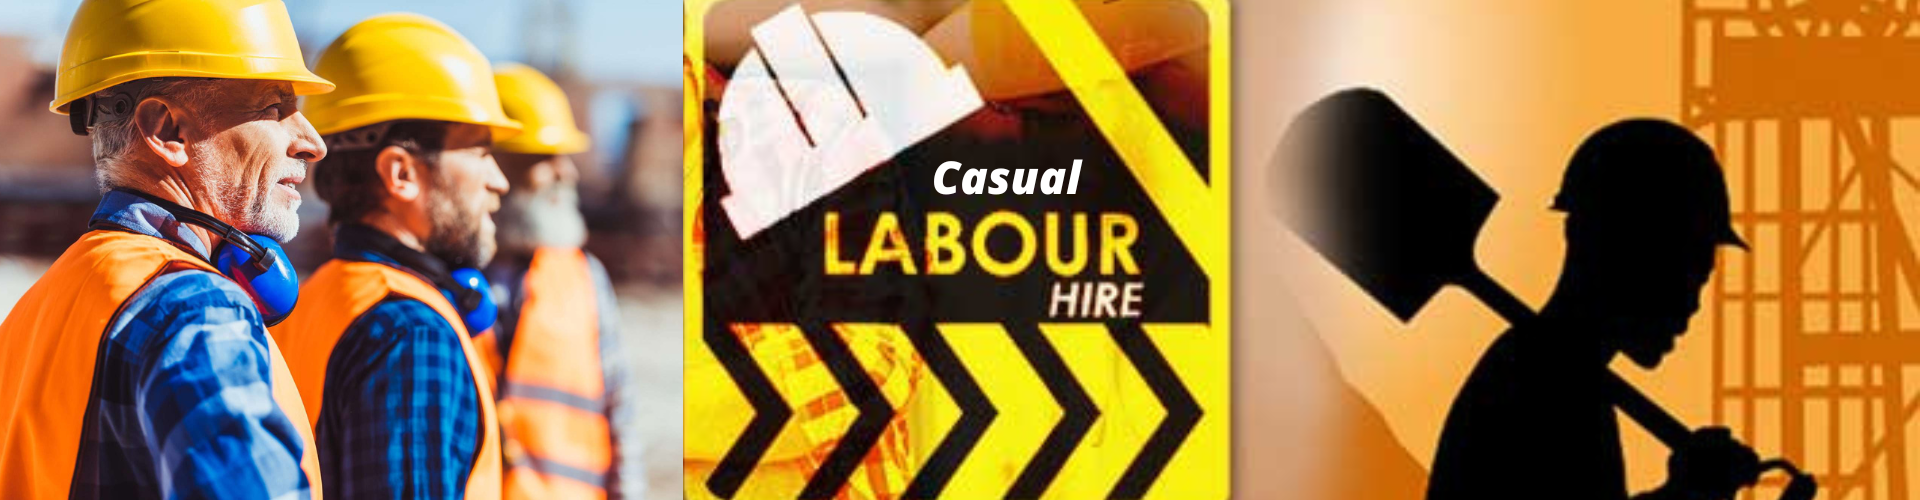 Casual Labour Hire